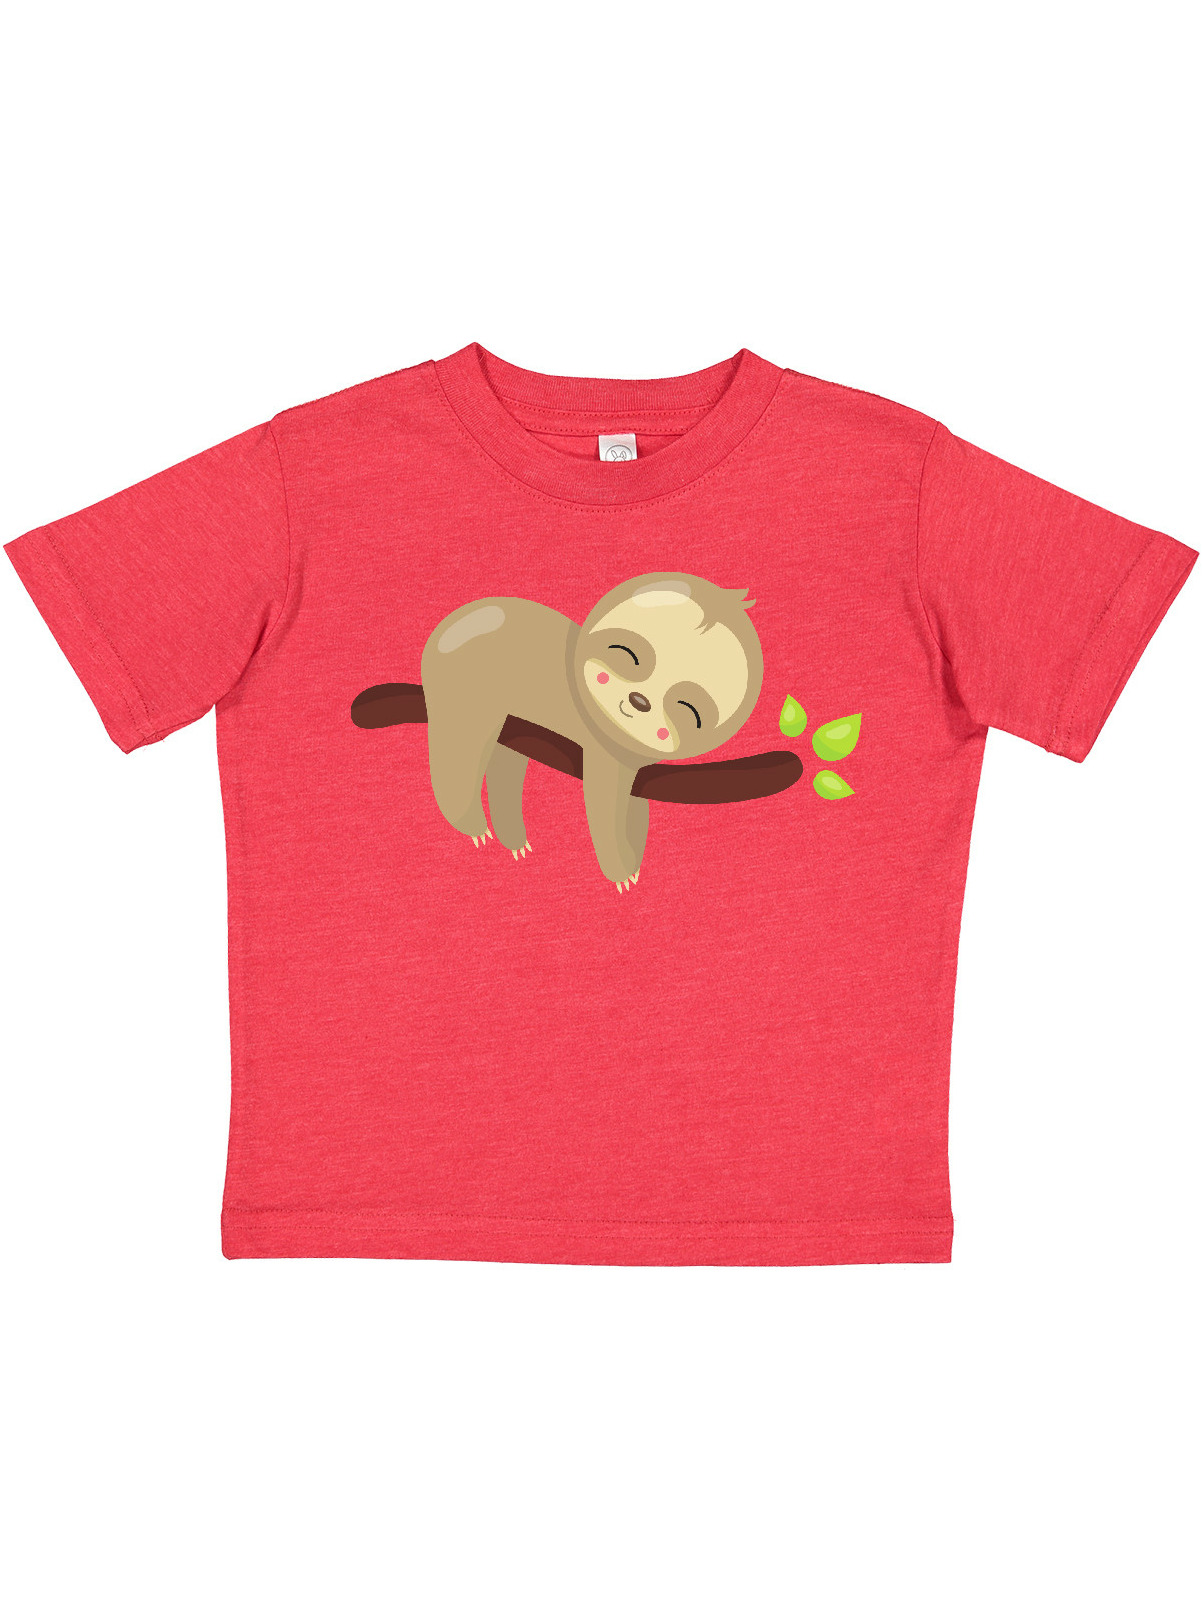 Inktastic Cute Sloth, Baby Sloth, Lazy Sloth, Sleeping Sloth Boys or Girls Toddler T-Shirt - image 1 of 4